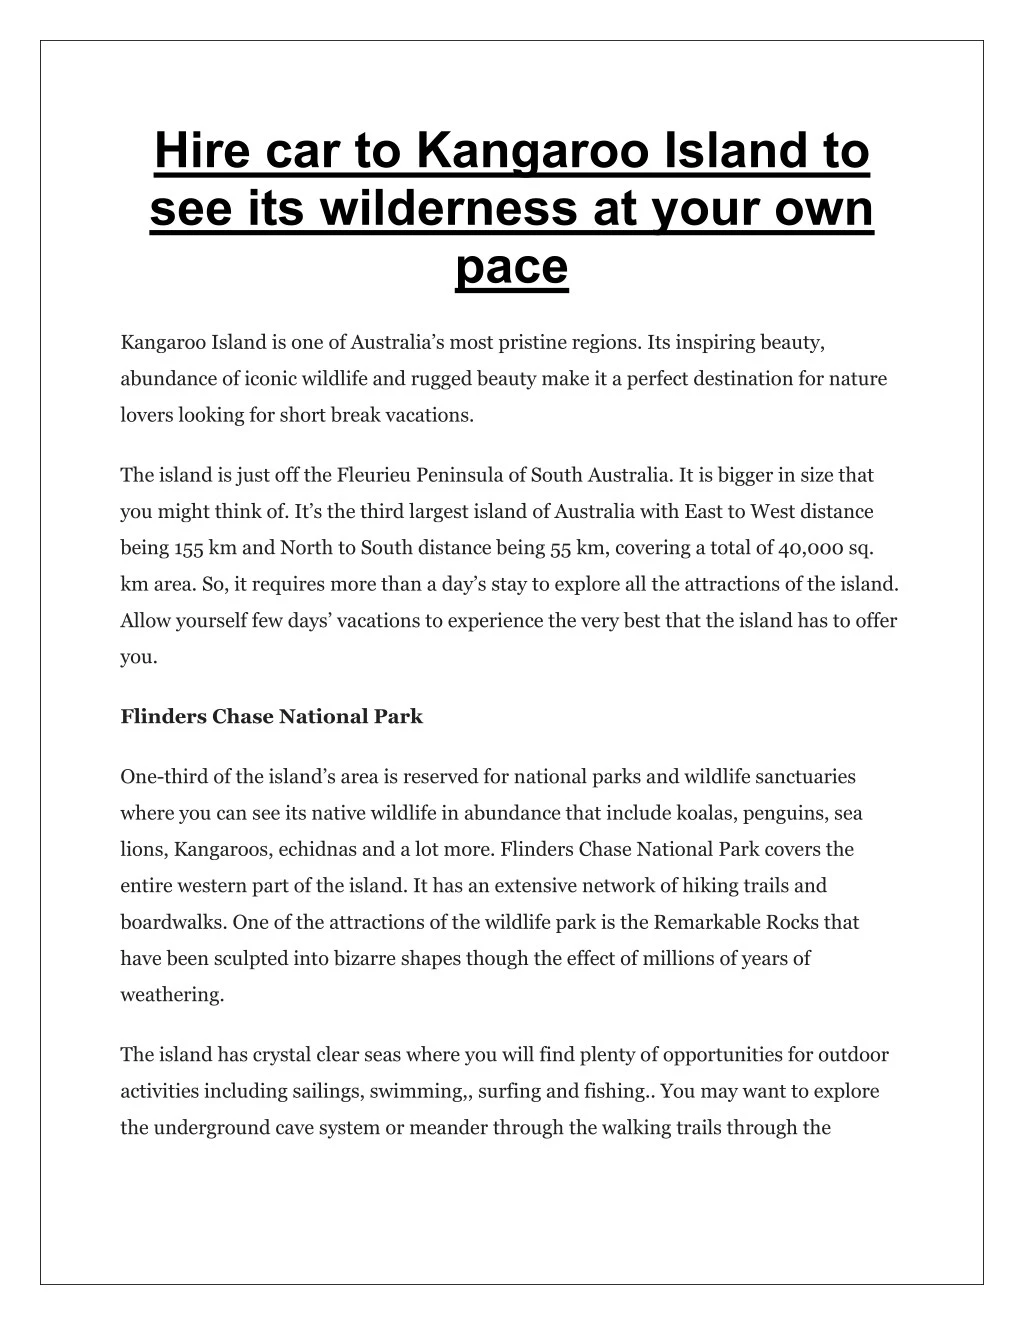 hire car to kangaroo island to see its wilderness